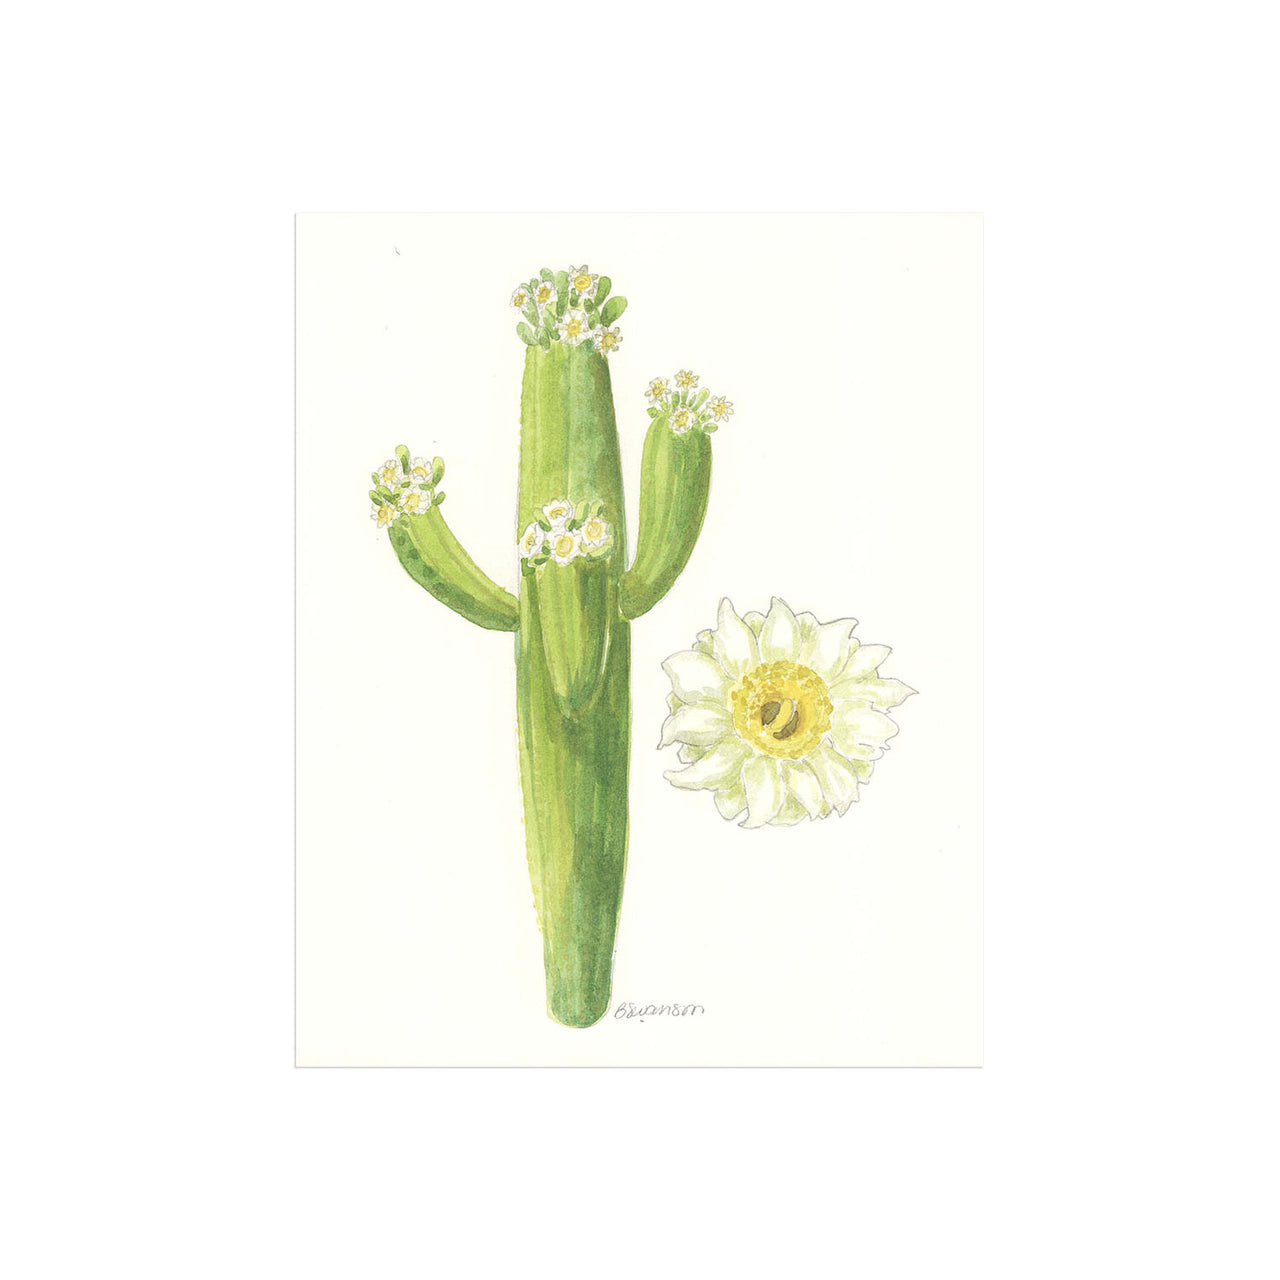 small original watercolor painting of a saguaro cactus and cactus flower